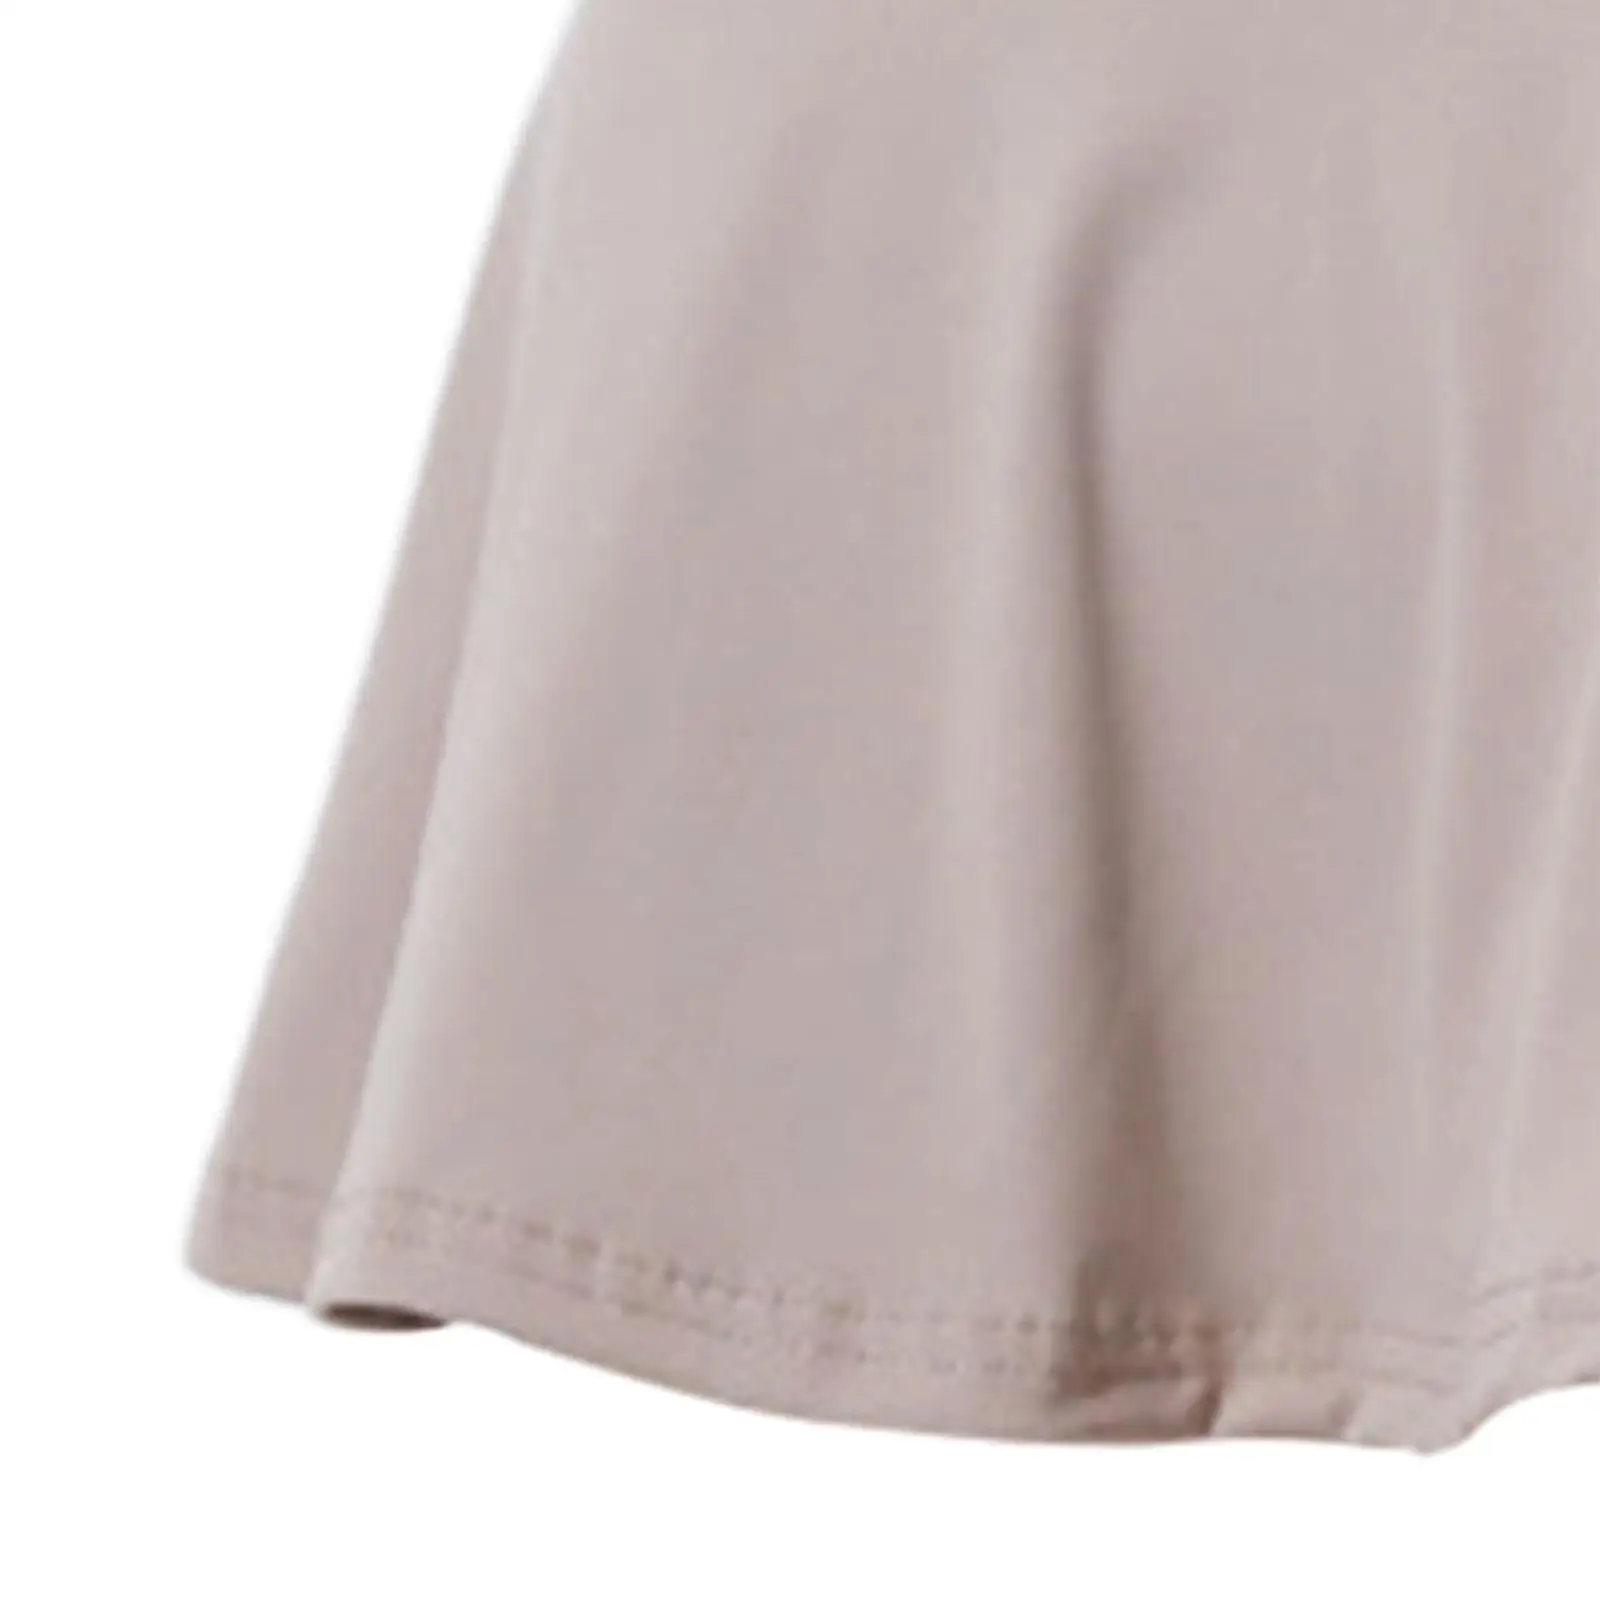 Tennis Skirts Short Skirts Clothing Anti Exposure Outfits Golf Skorts Skirt Badminton Skirt for Running Summer Beach Yoga Sports